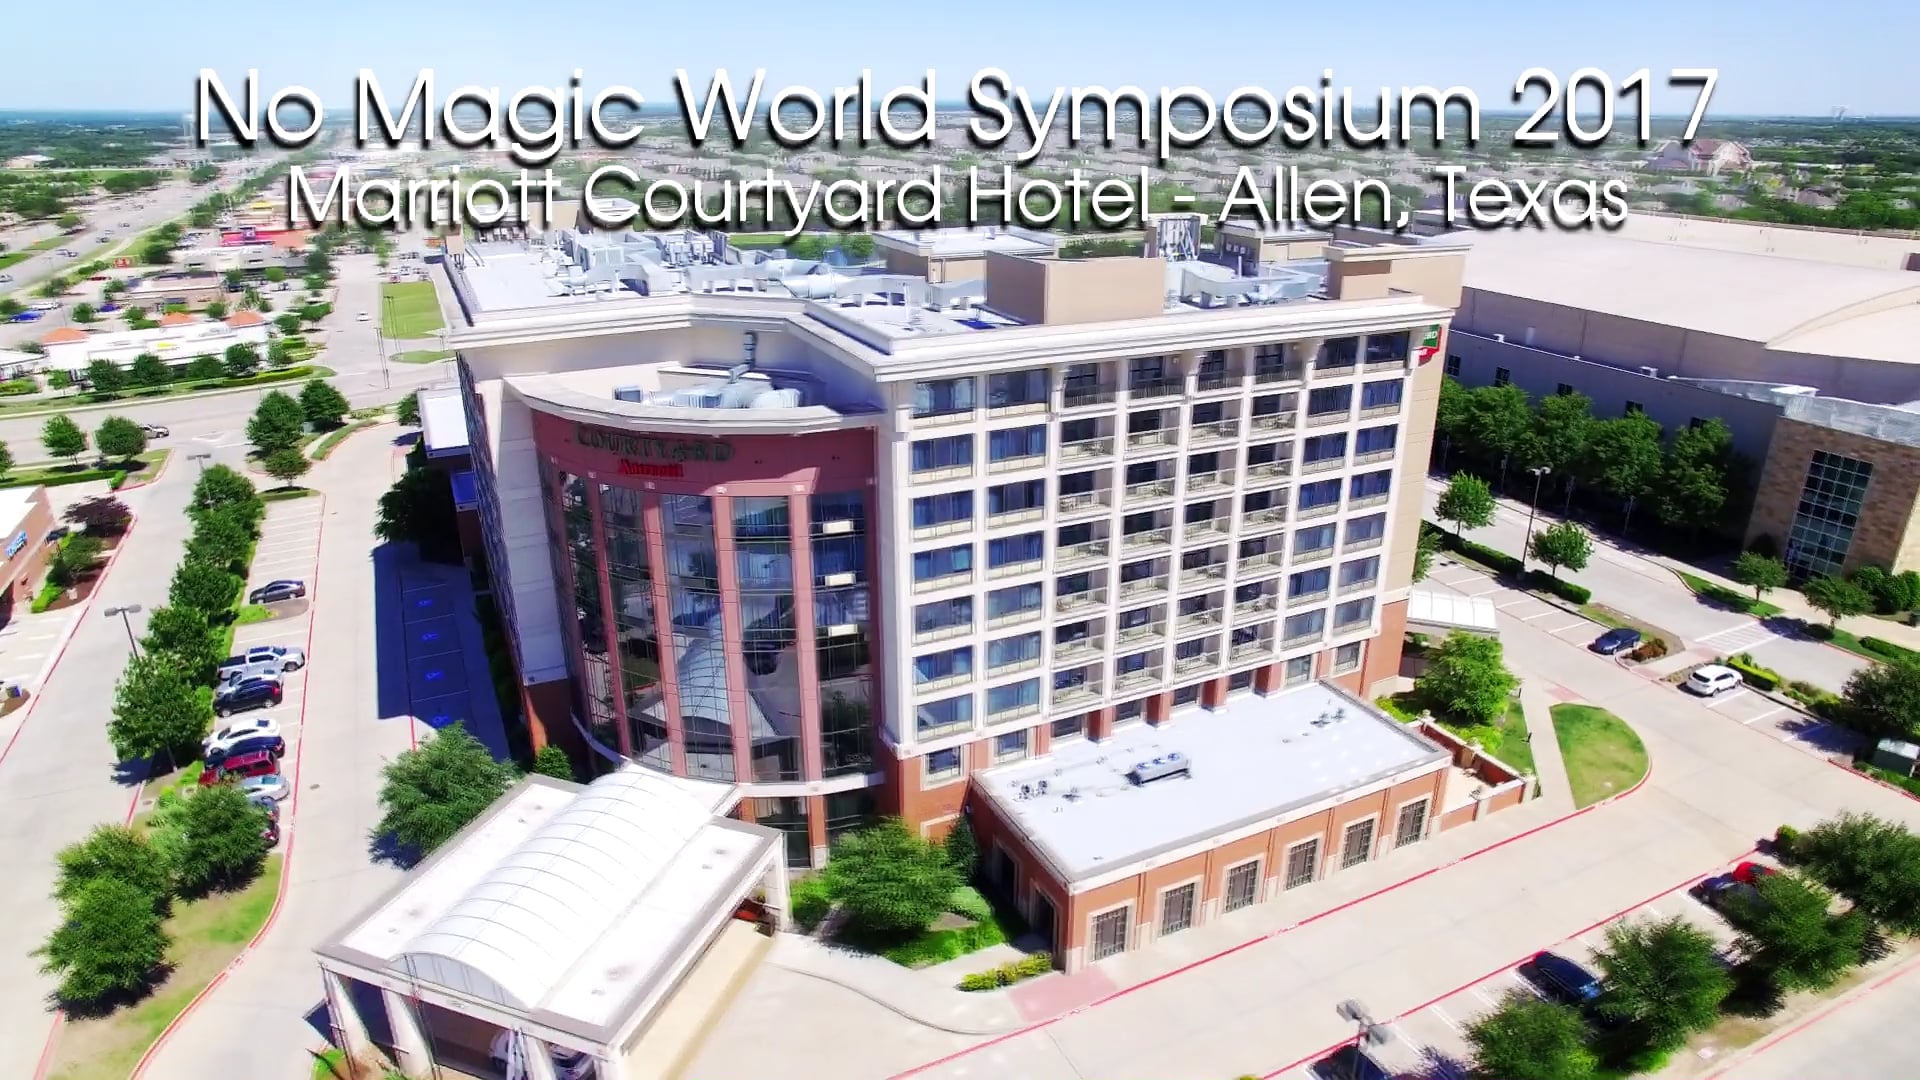 No Magic World Symposium 2017 Video Opener